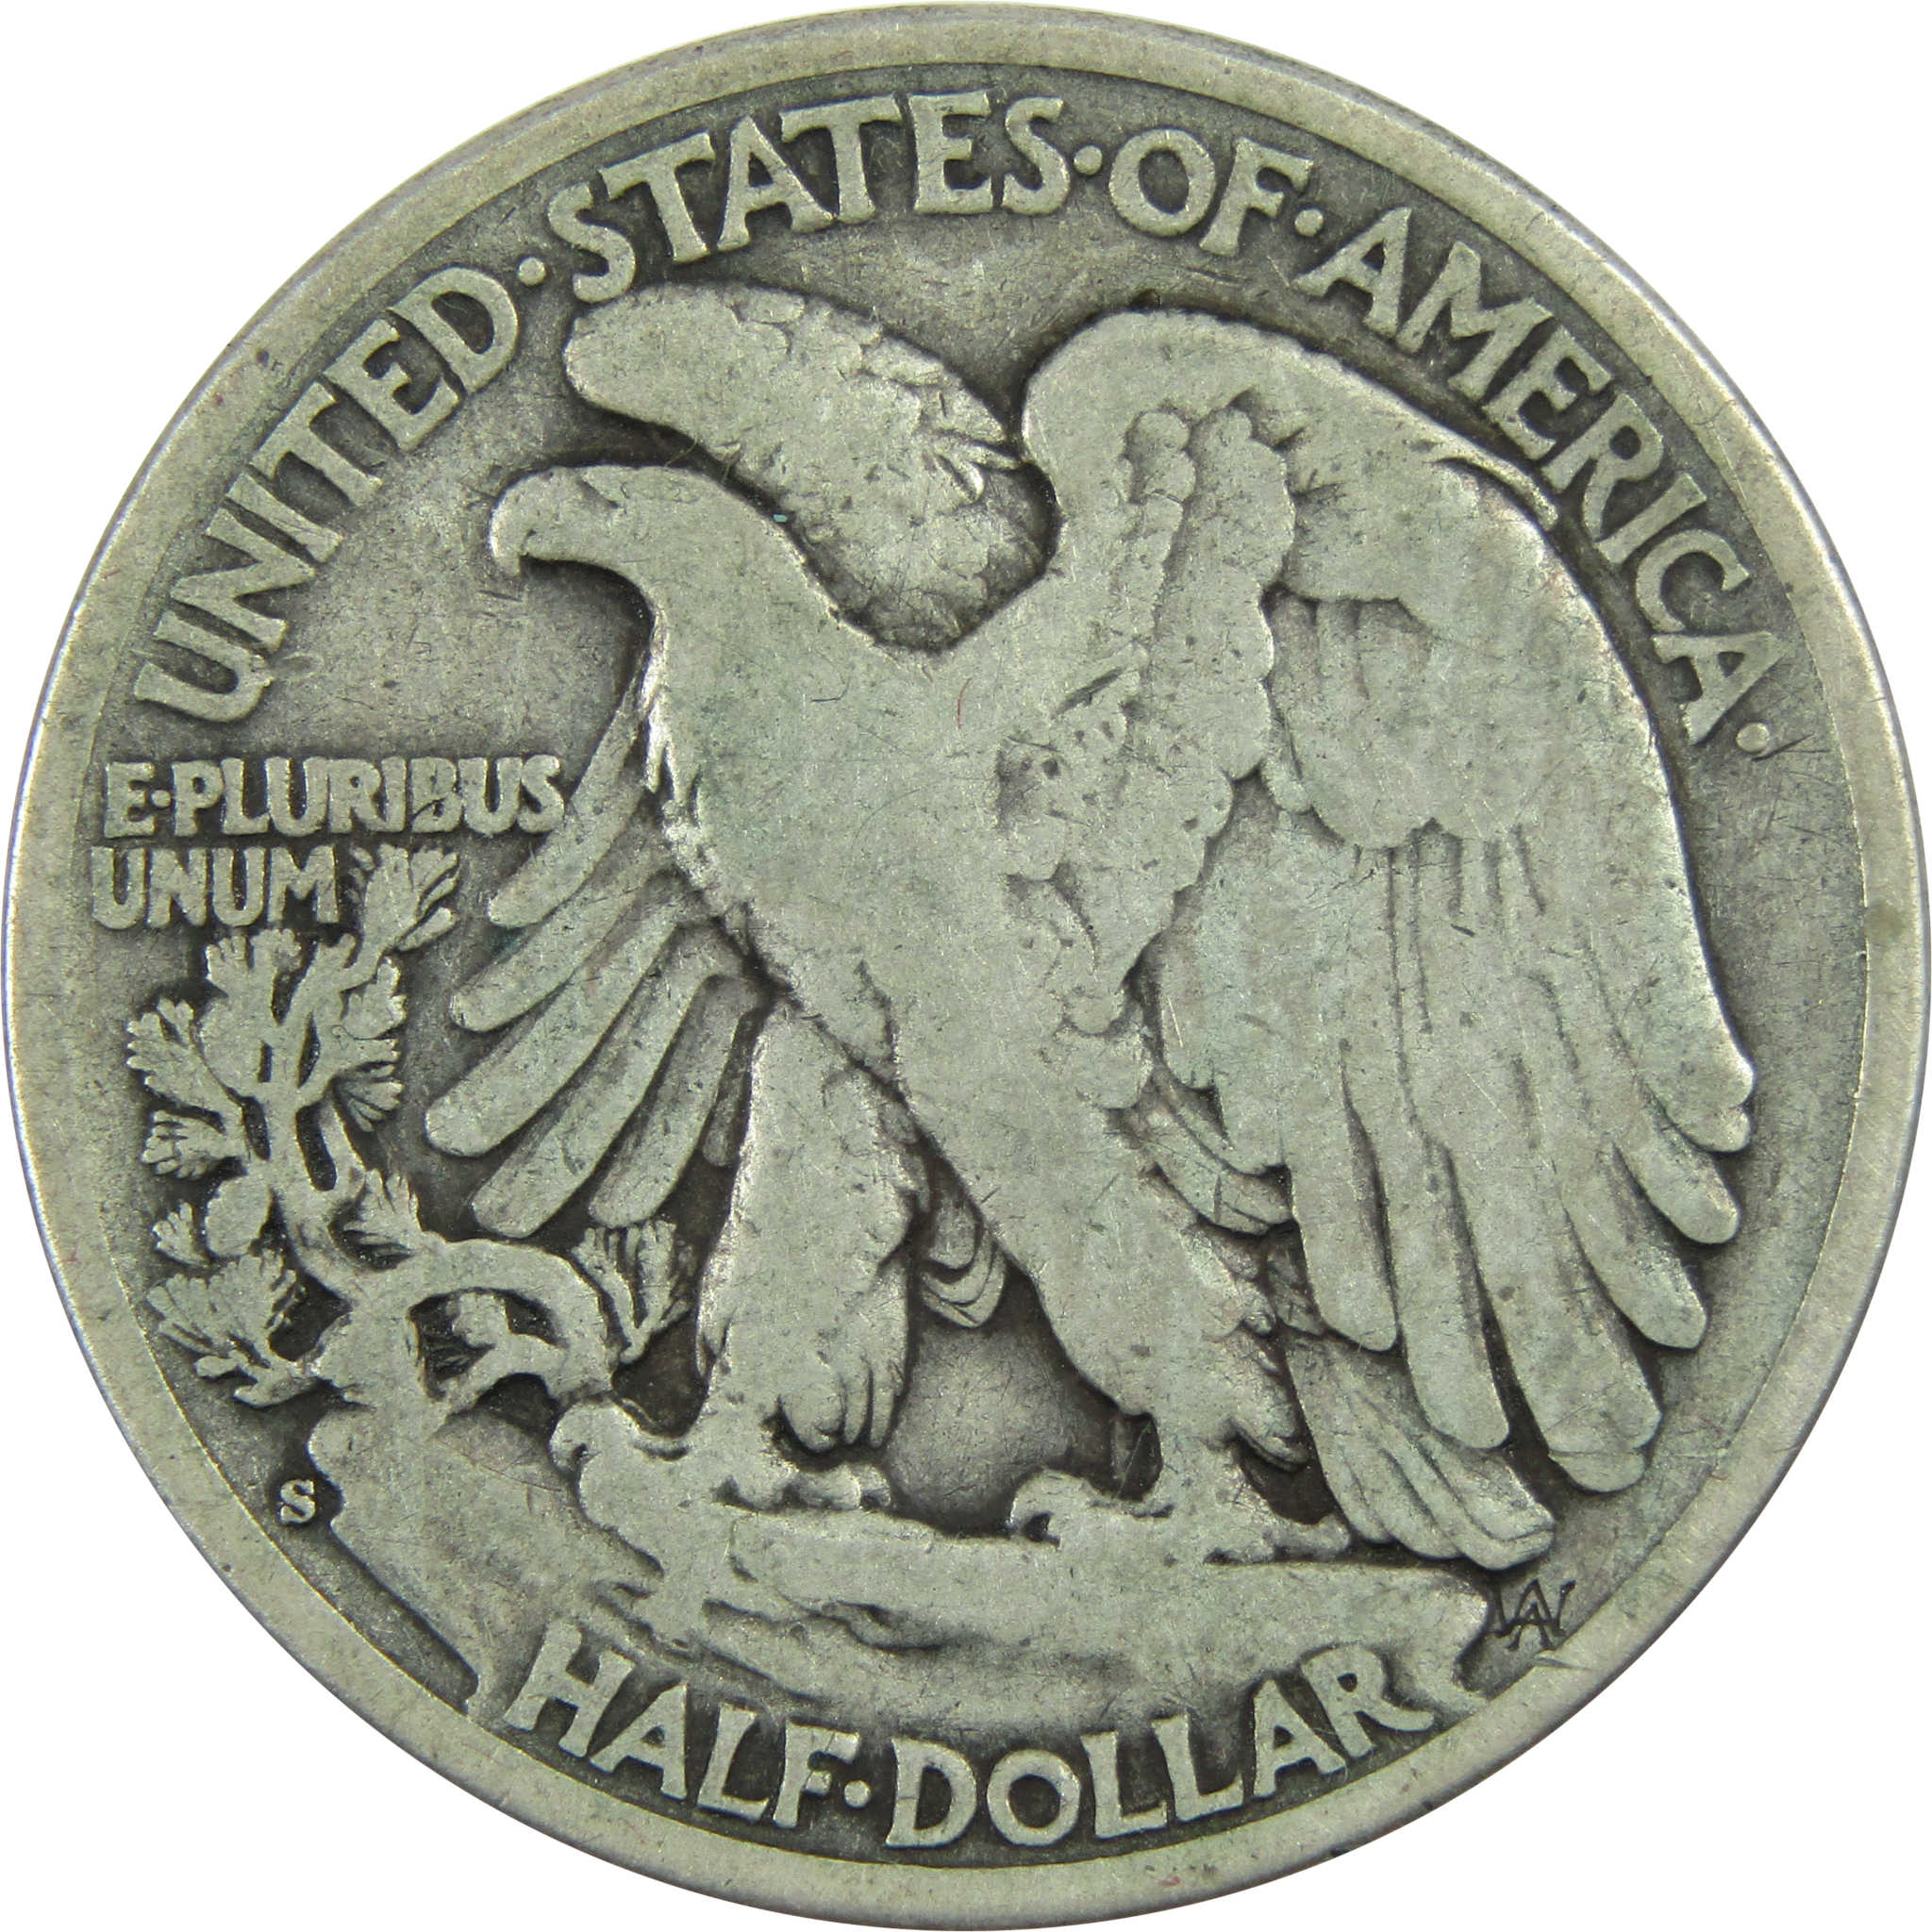 1928 S Liberty Walking Half Dollar F Fine Silver 50c Coin SKU:I13485